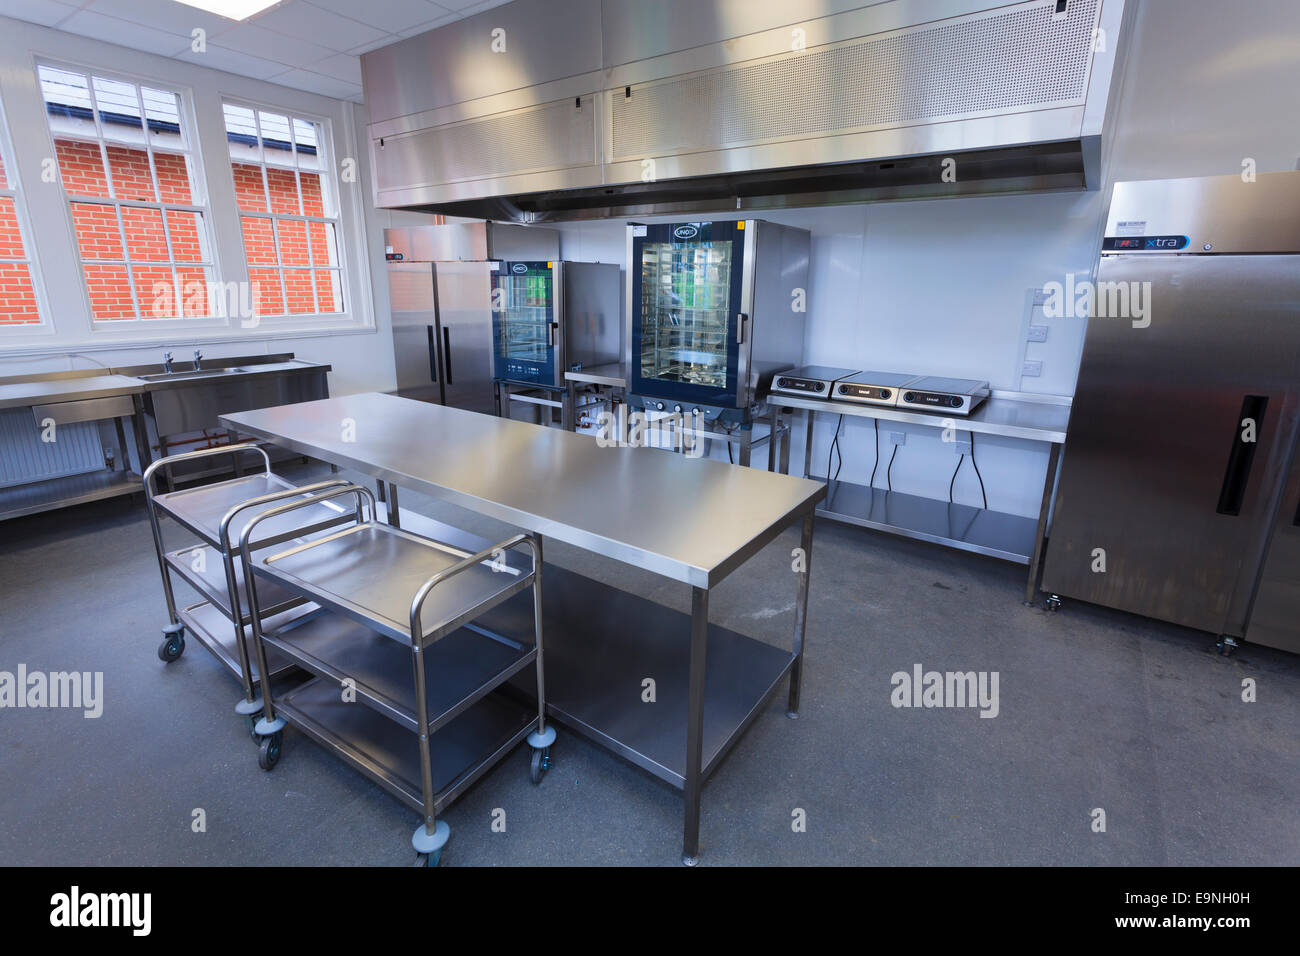 School kitchens at Isle of Wight Studio School Stock Photo